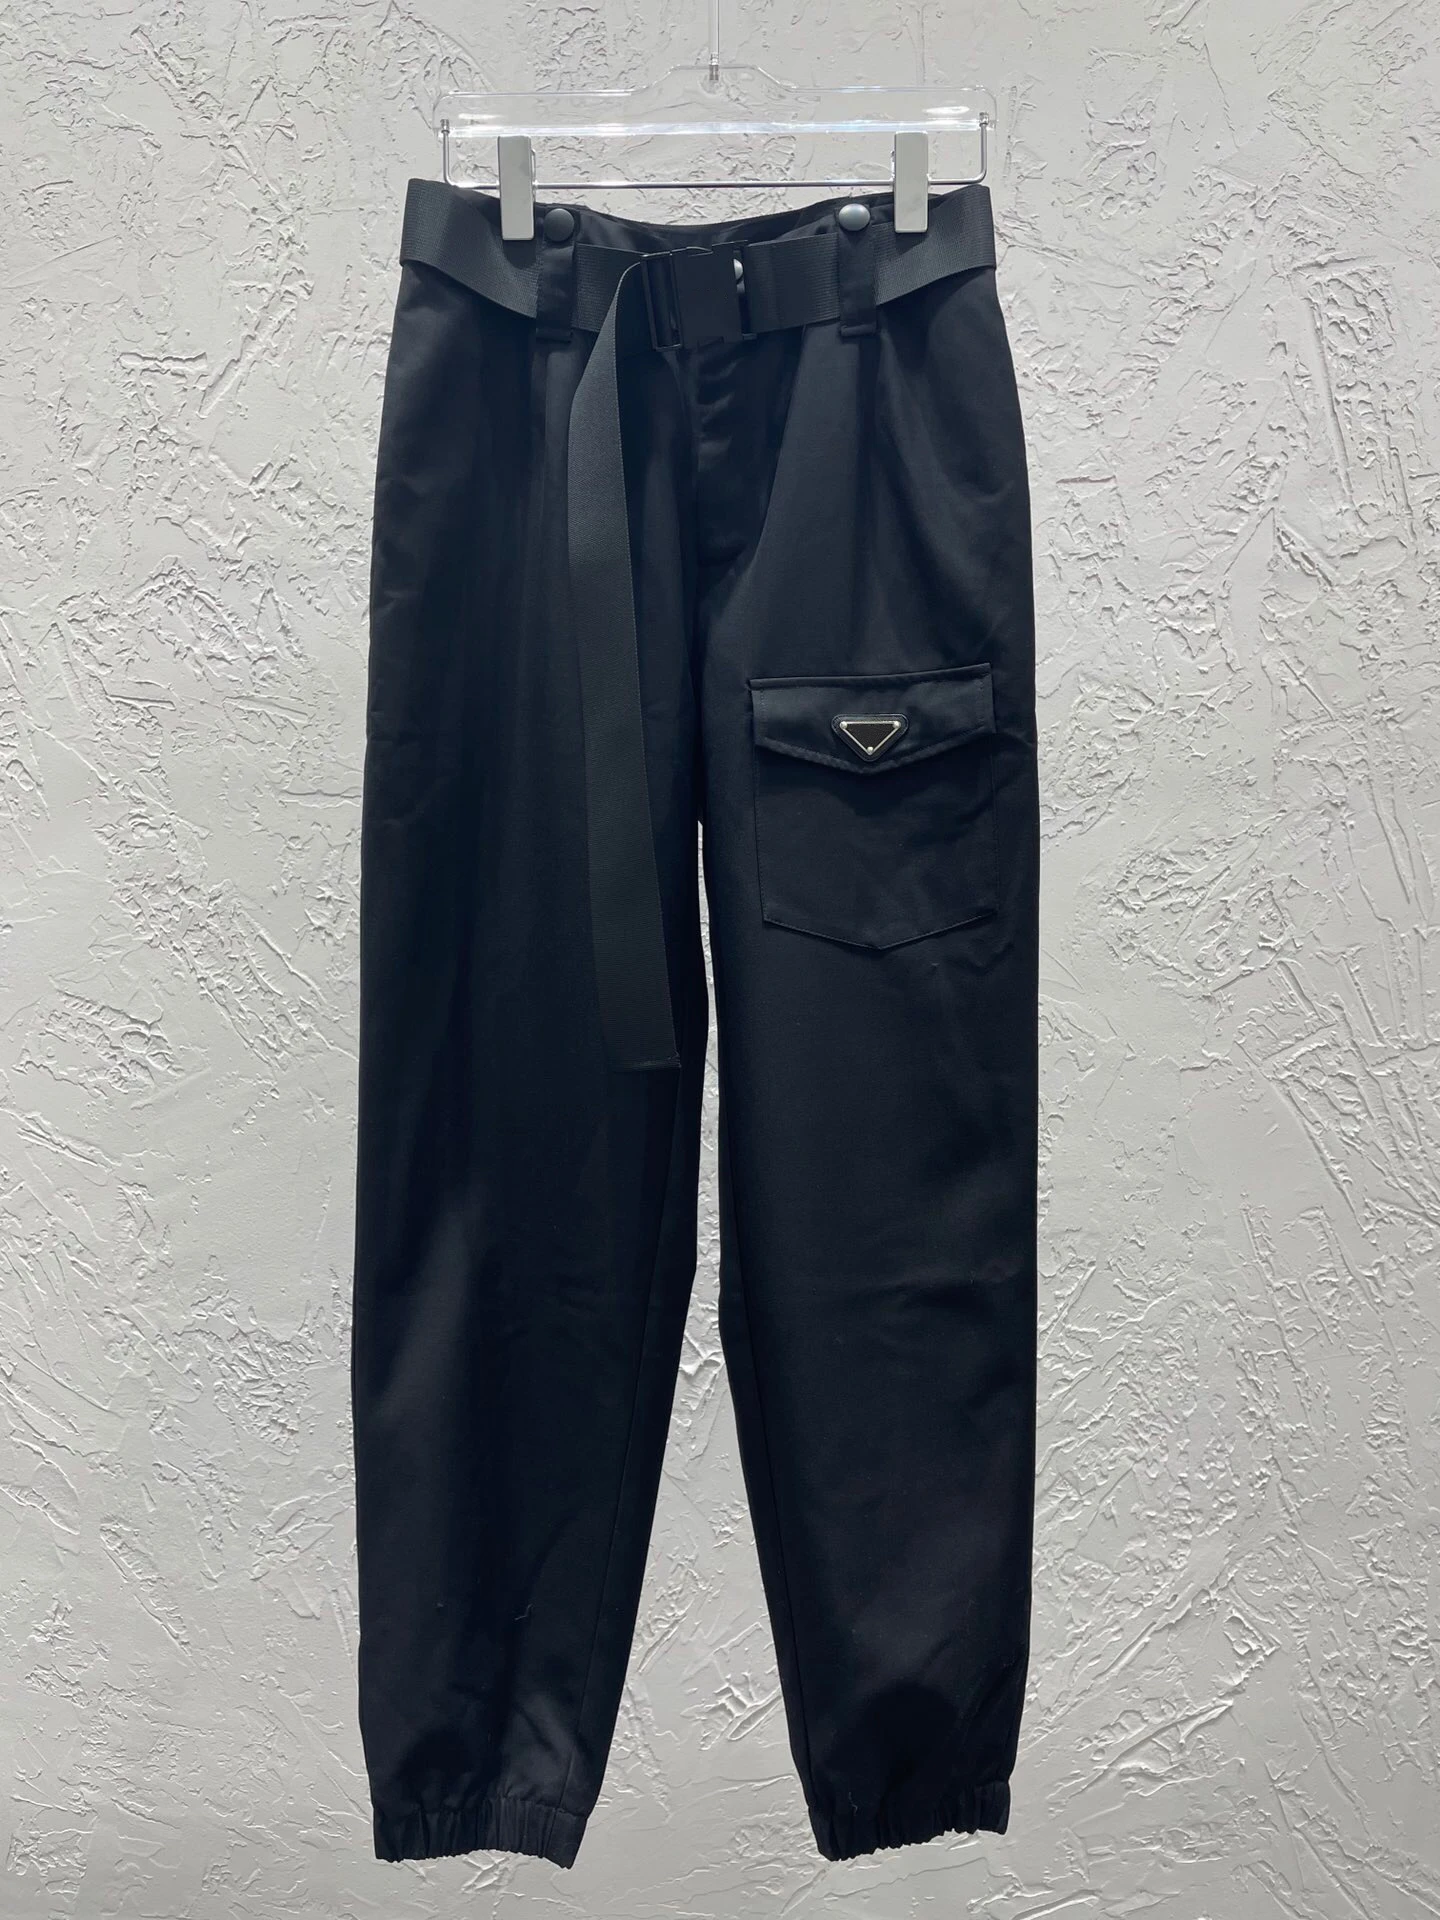 2021 Spring Summer Luxury Design Gothic Street Style Elastic Black Cotton Belted High Waist Cargo Pants